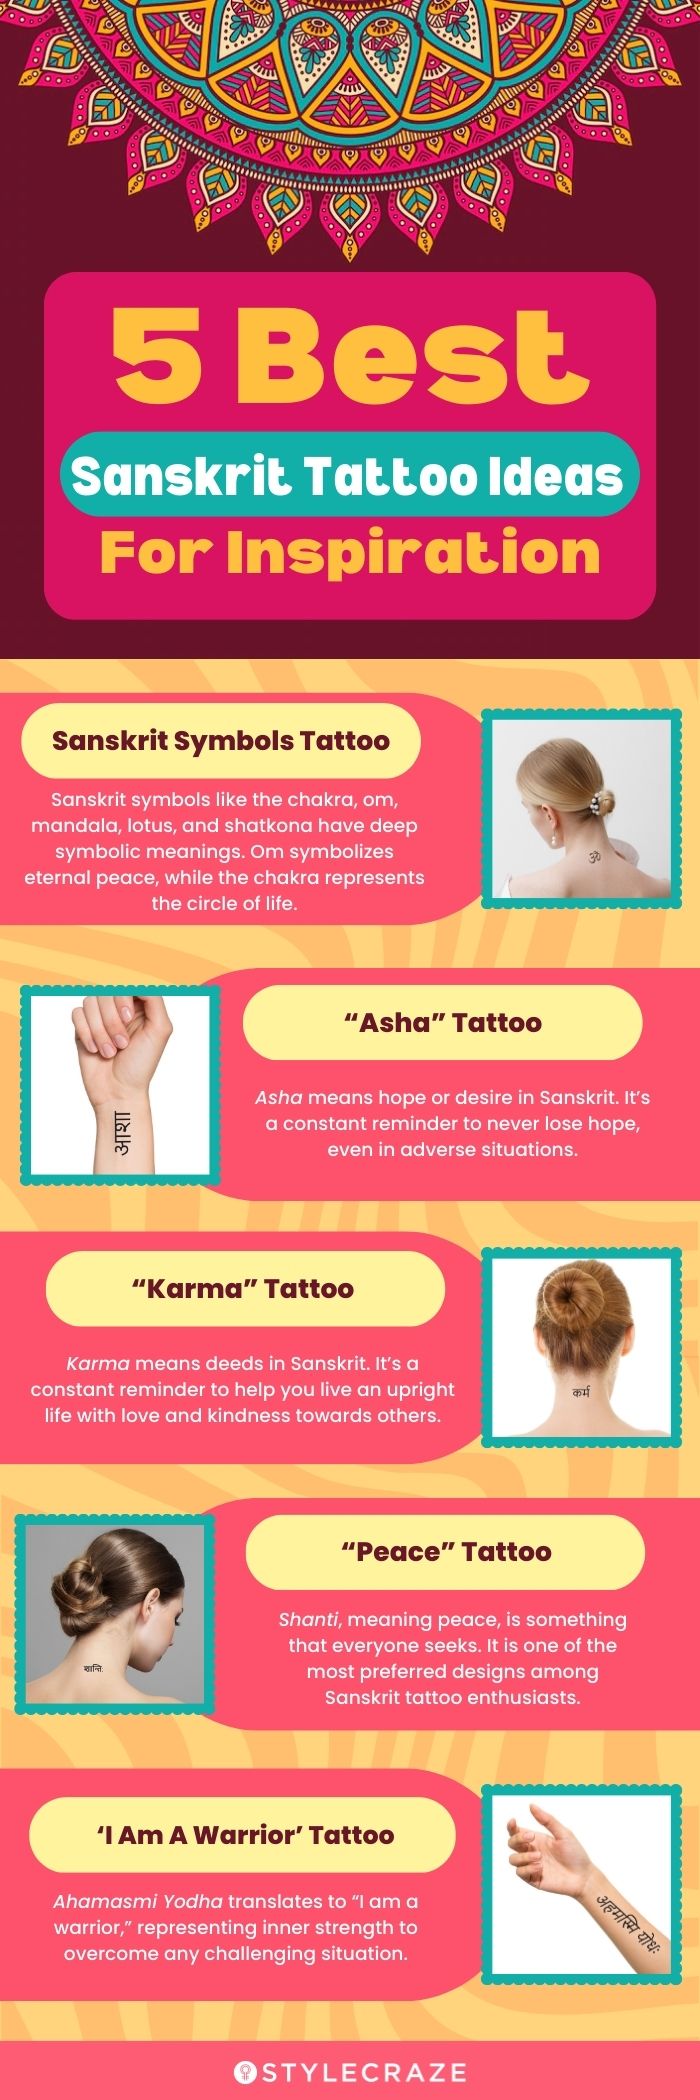 5 best sanskrit tattoo ideas for inspiration (infographic)